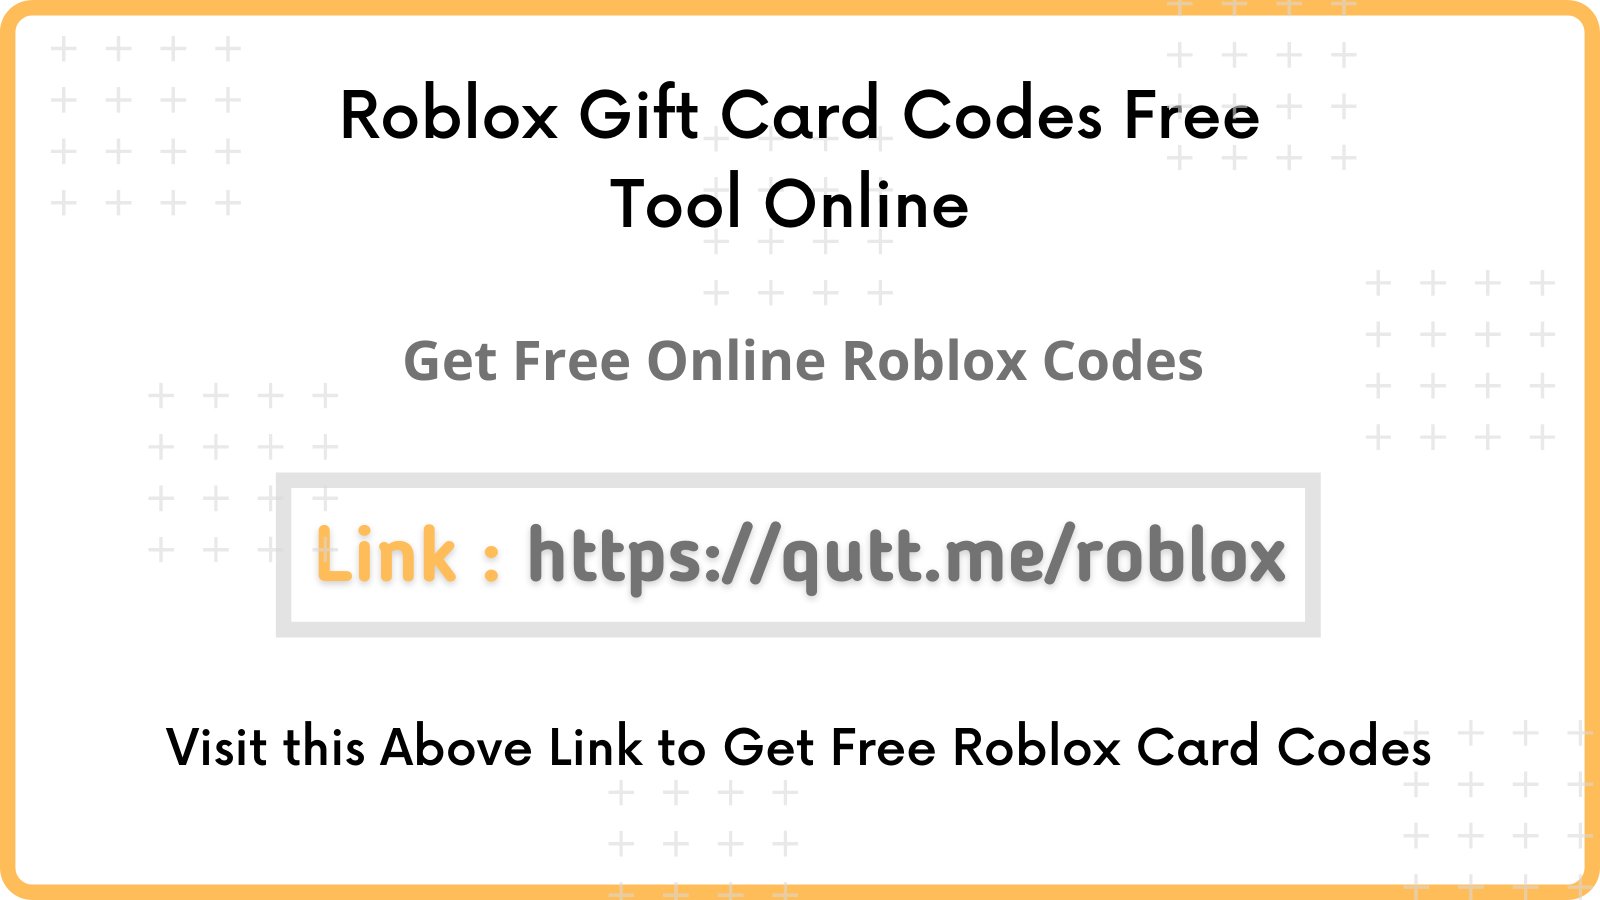 Free $50 Roblox Gift Card - Get Free Roblox Gift CARD Codes 2021